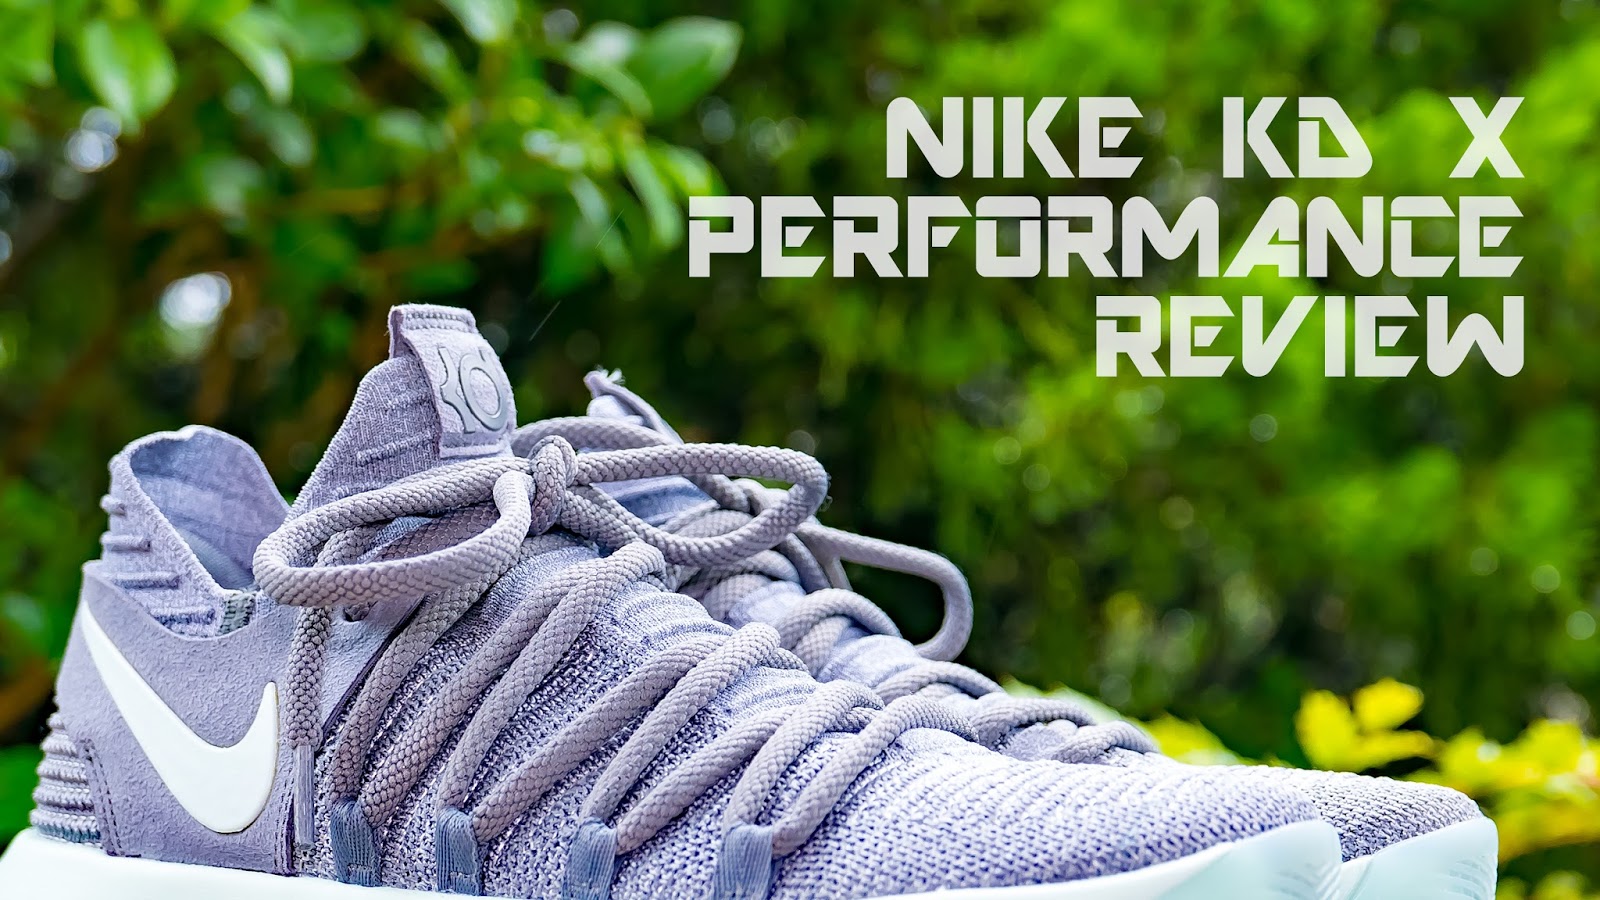 Nike Zoom KD XI (11) EP Performance Review | SZOK